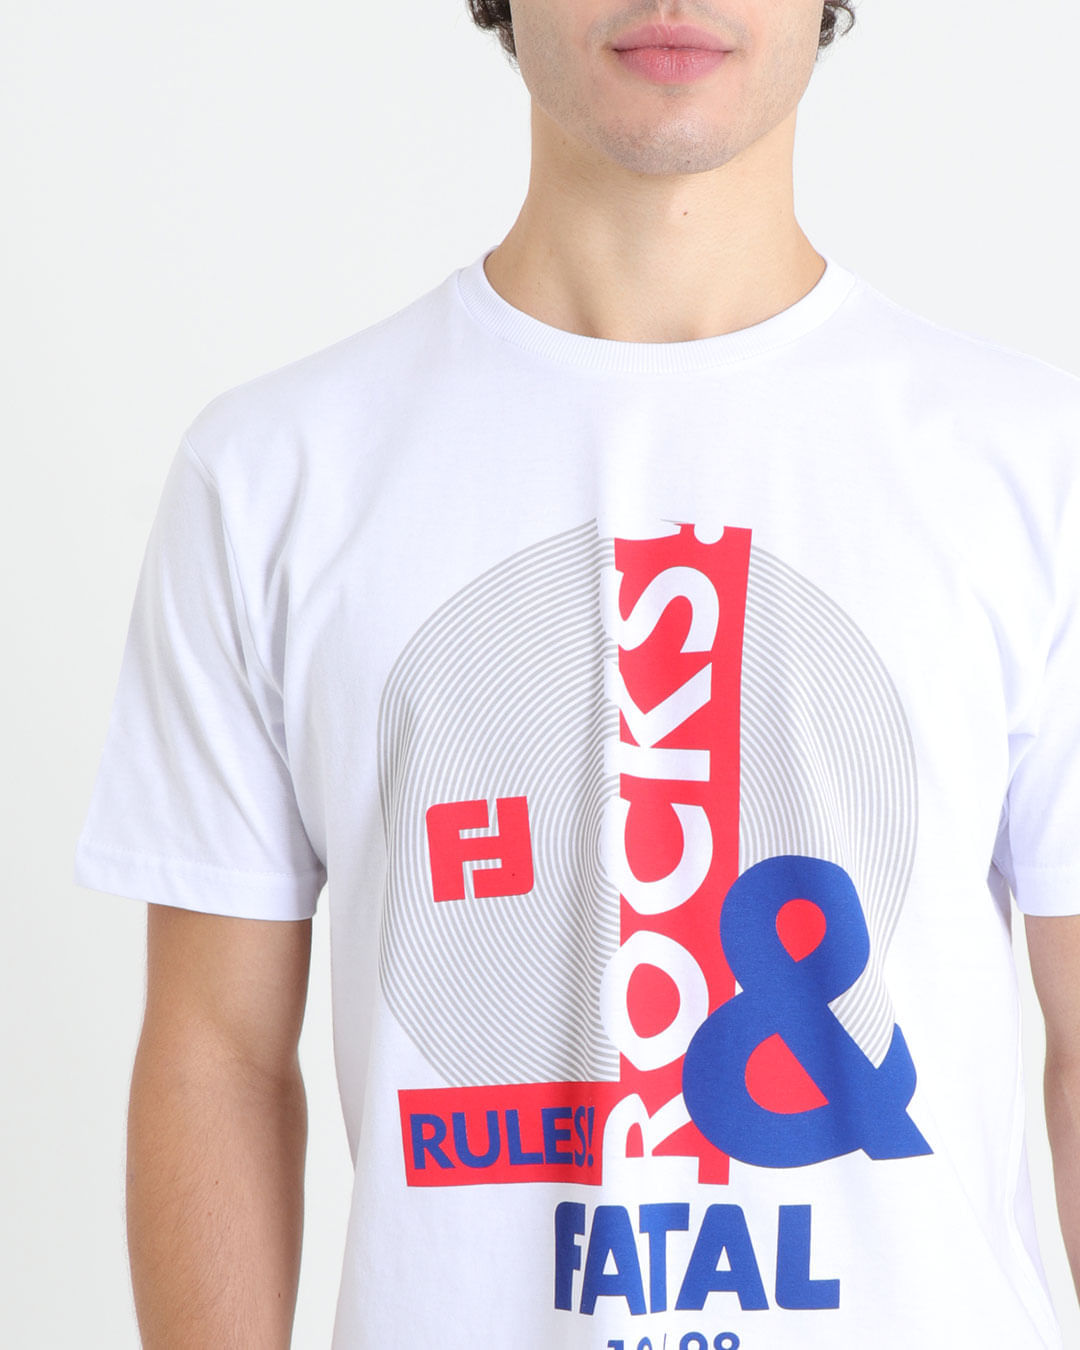 Camiseta-Masculina-Manga-Curta-Estampa-Rocks-Fatal-Branca